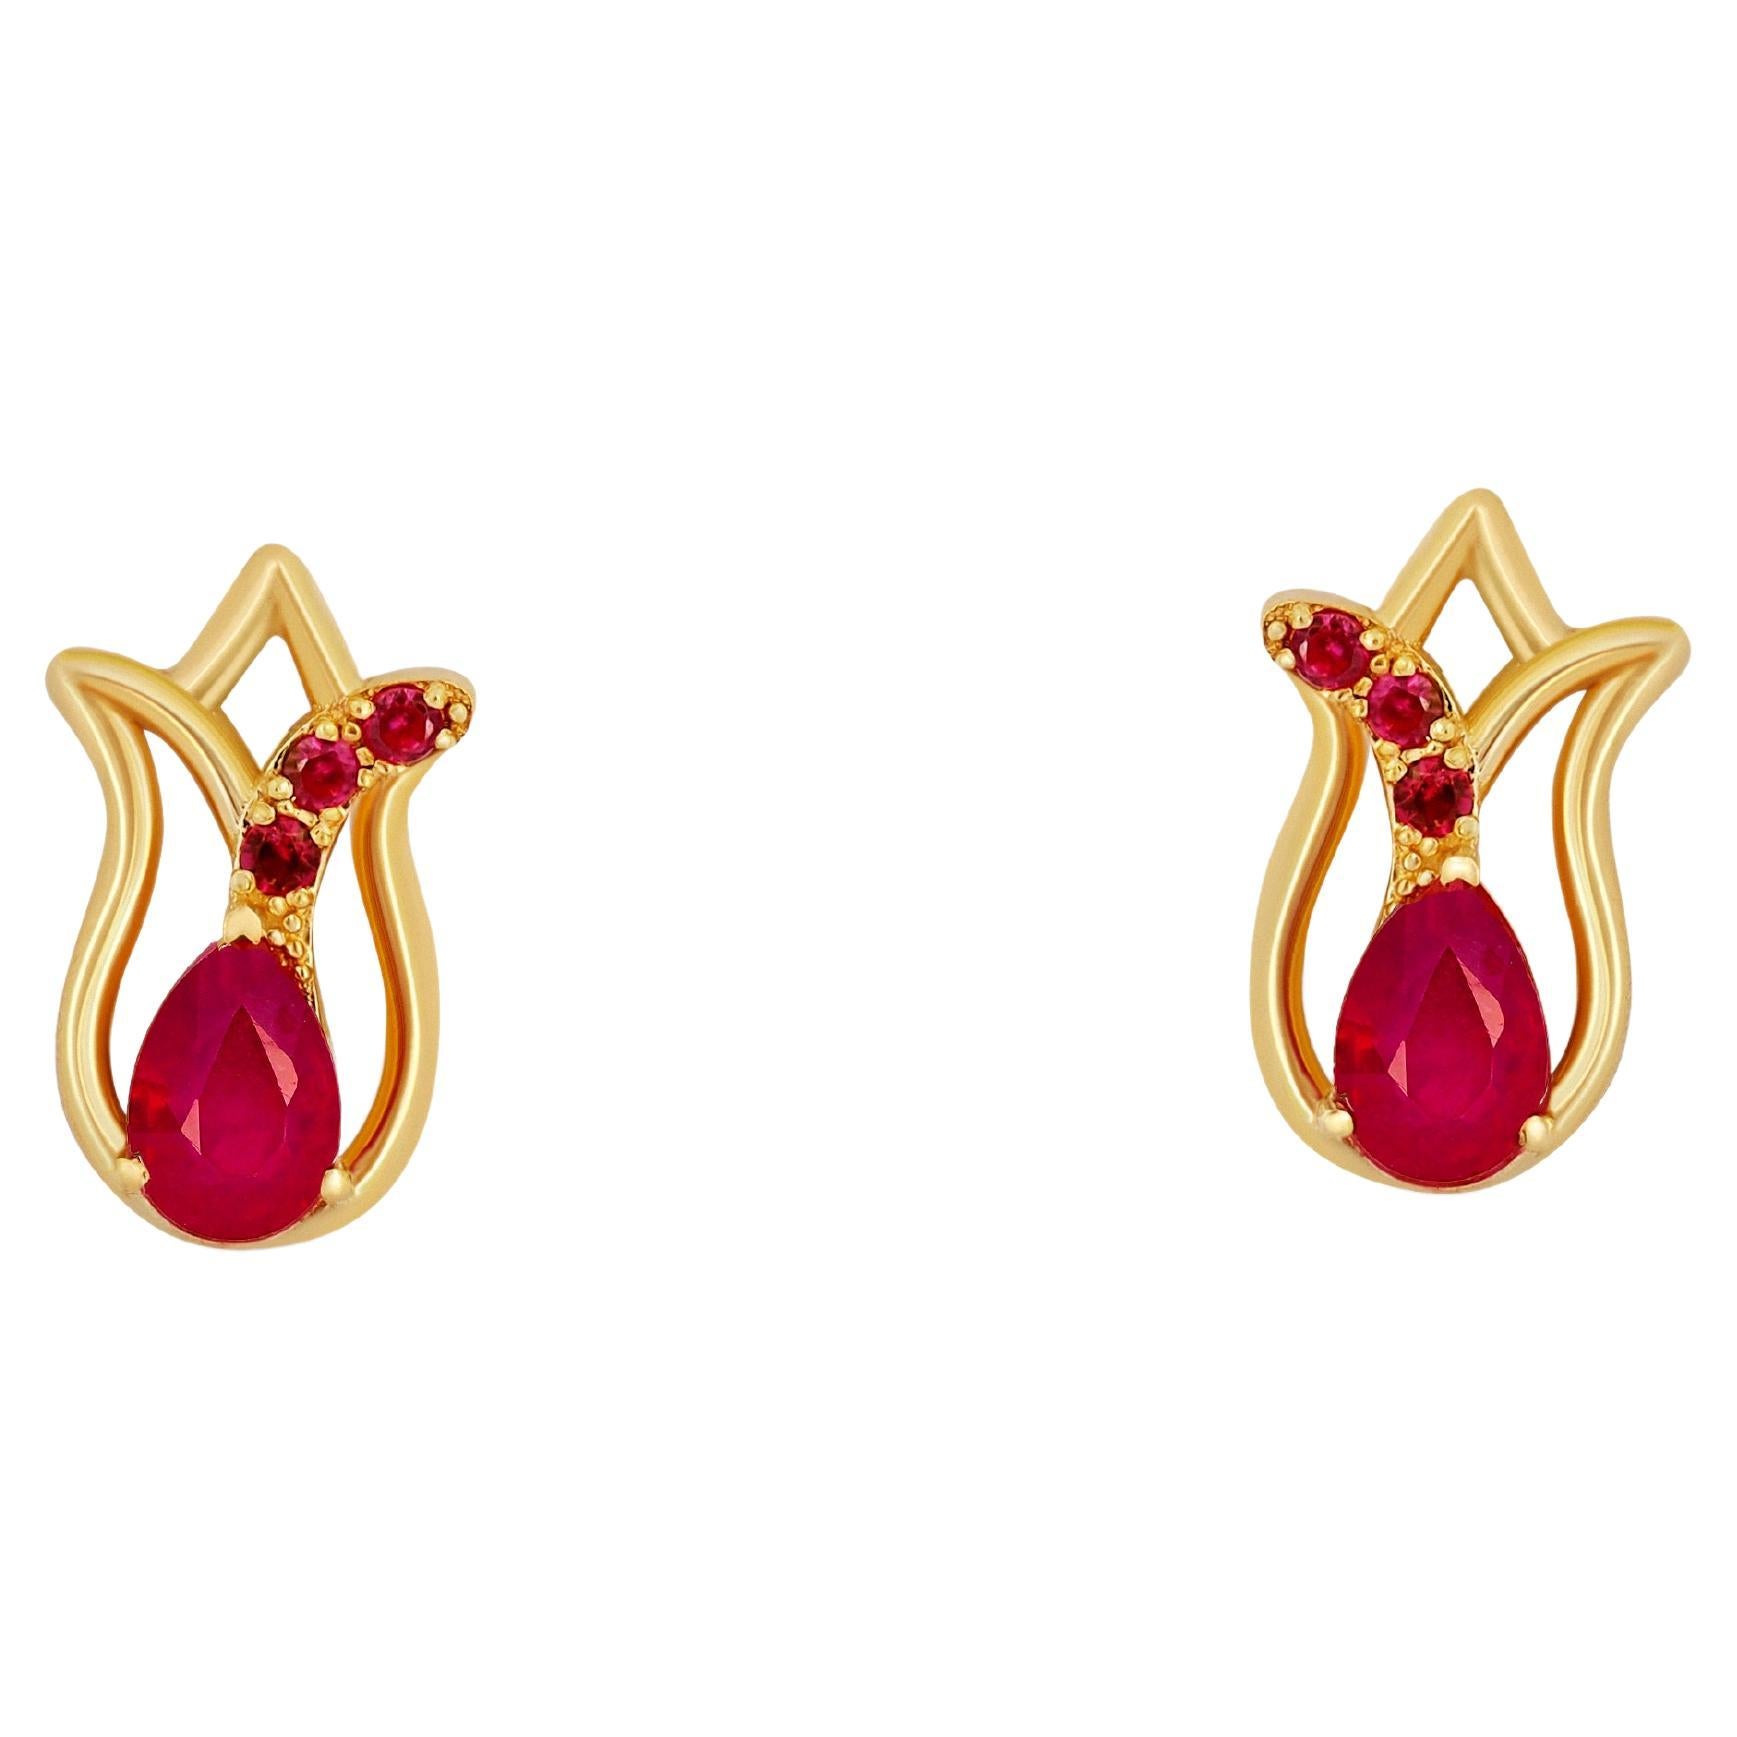 Tulip flower earrings studs with rubies in 14k gold